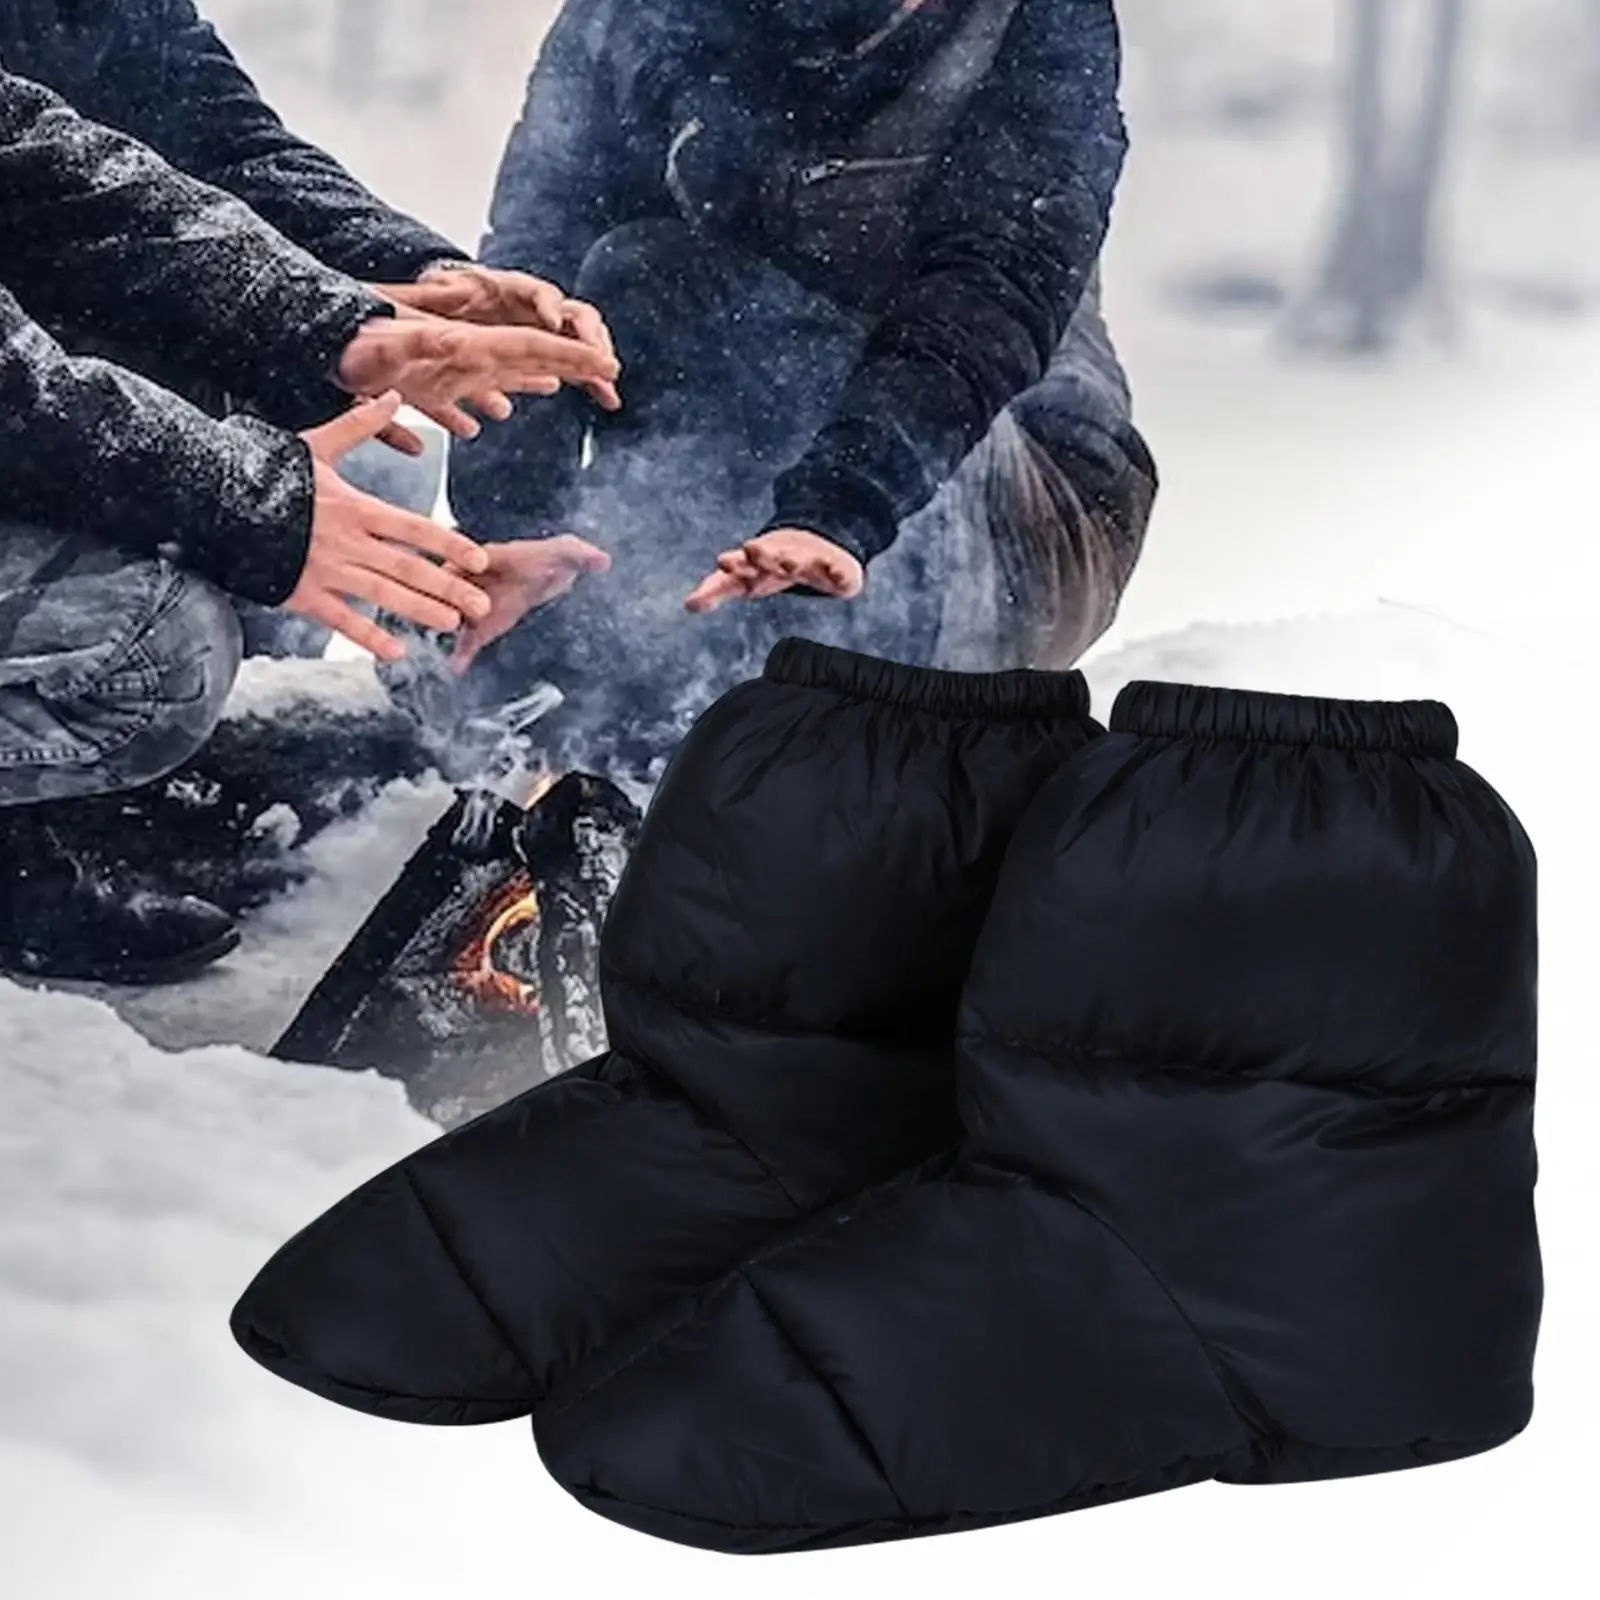 Winter Down Slippers Warm Bootie Shoes Women Men Keep Warm Waterproof Feet Cover Socks for Fishing Camping Hiking Skiing Indoor